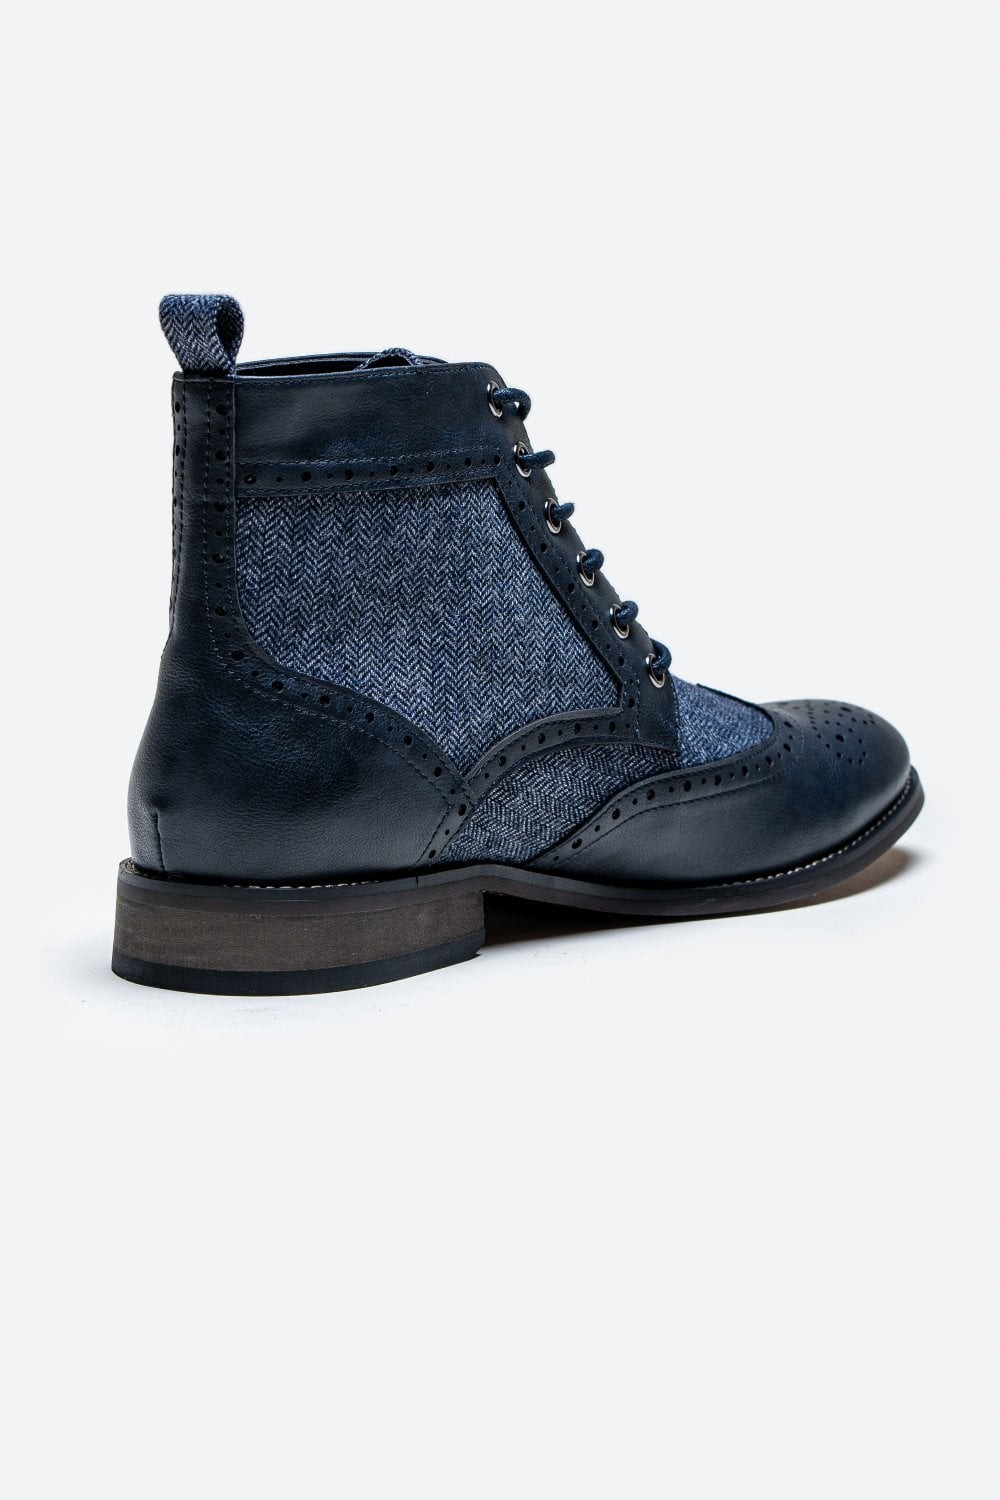 Men's Ankle Boots Lace Up Brogue Footwear - Navy blau